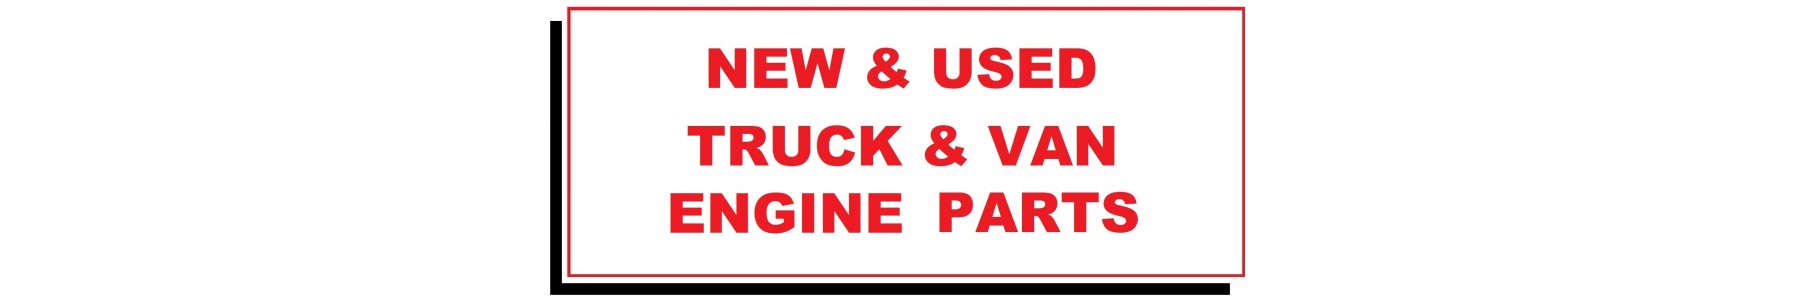 NEW & USED VAN ENGINE PARTS